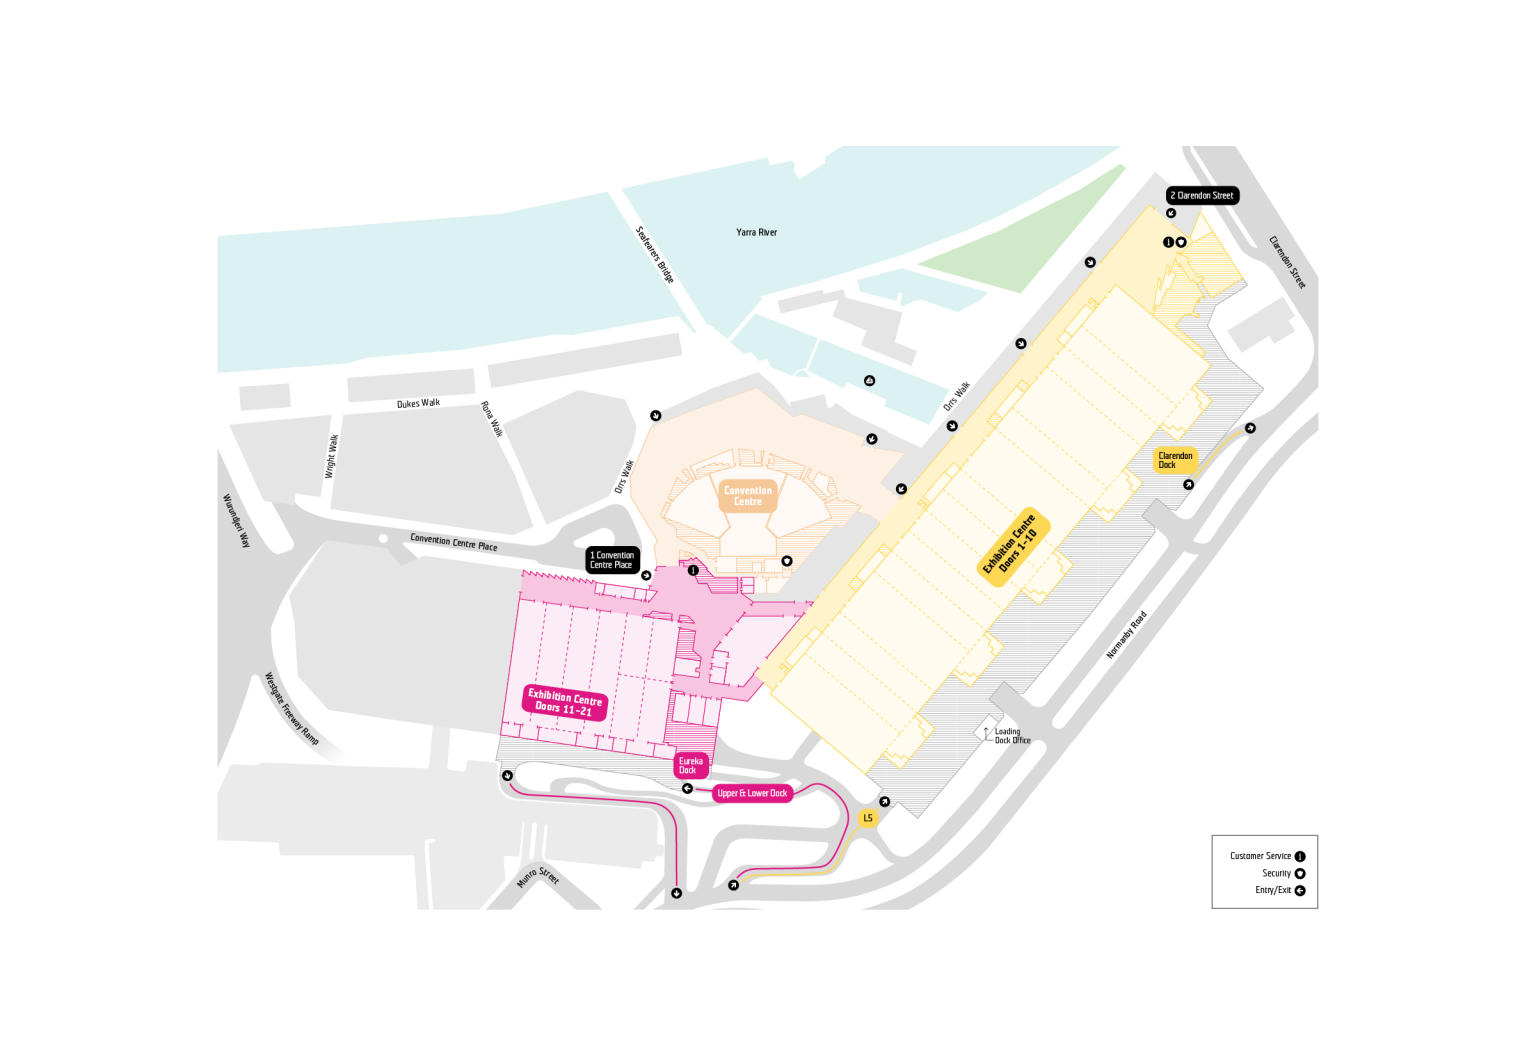 Melbourne Exhibition Centre loading dock map